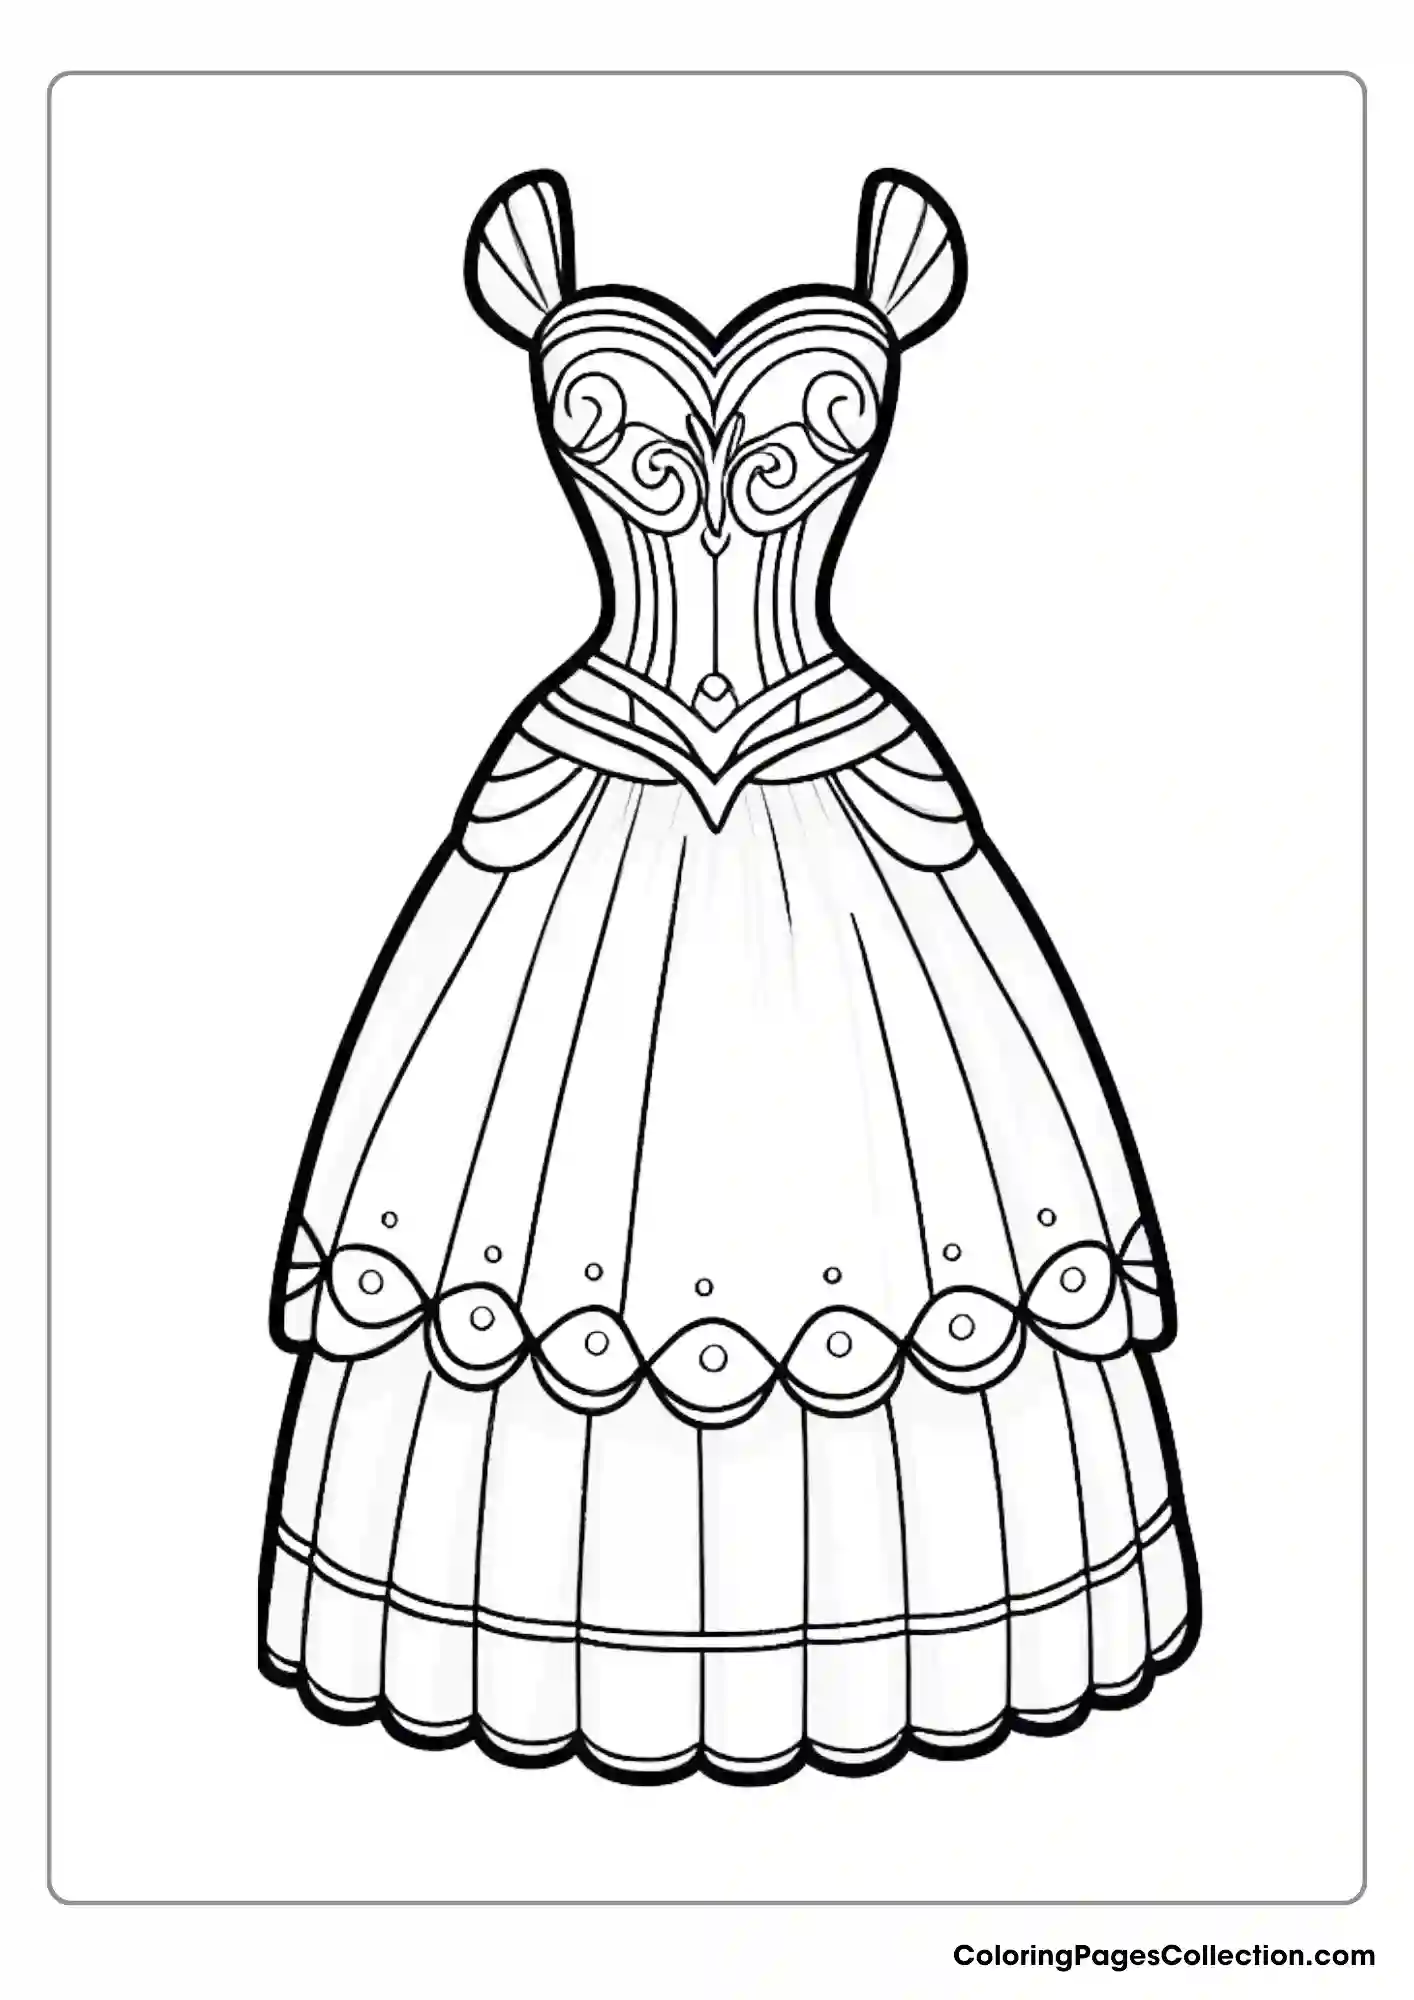 Orm-fitting Top Princess Dress